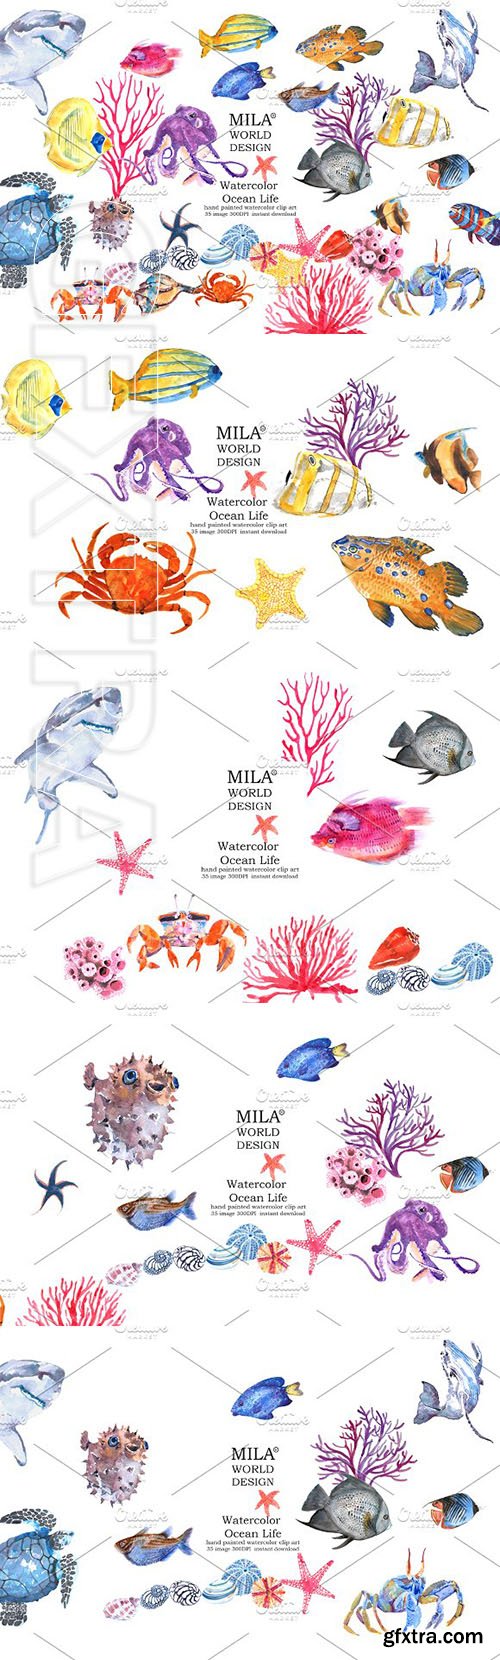 CreativeMarket - Watercolor Ocean Life Clipart 2390285